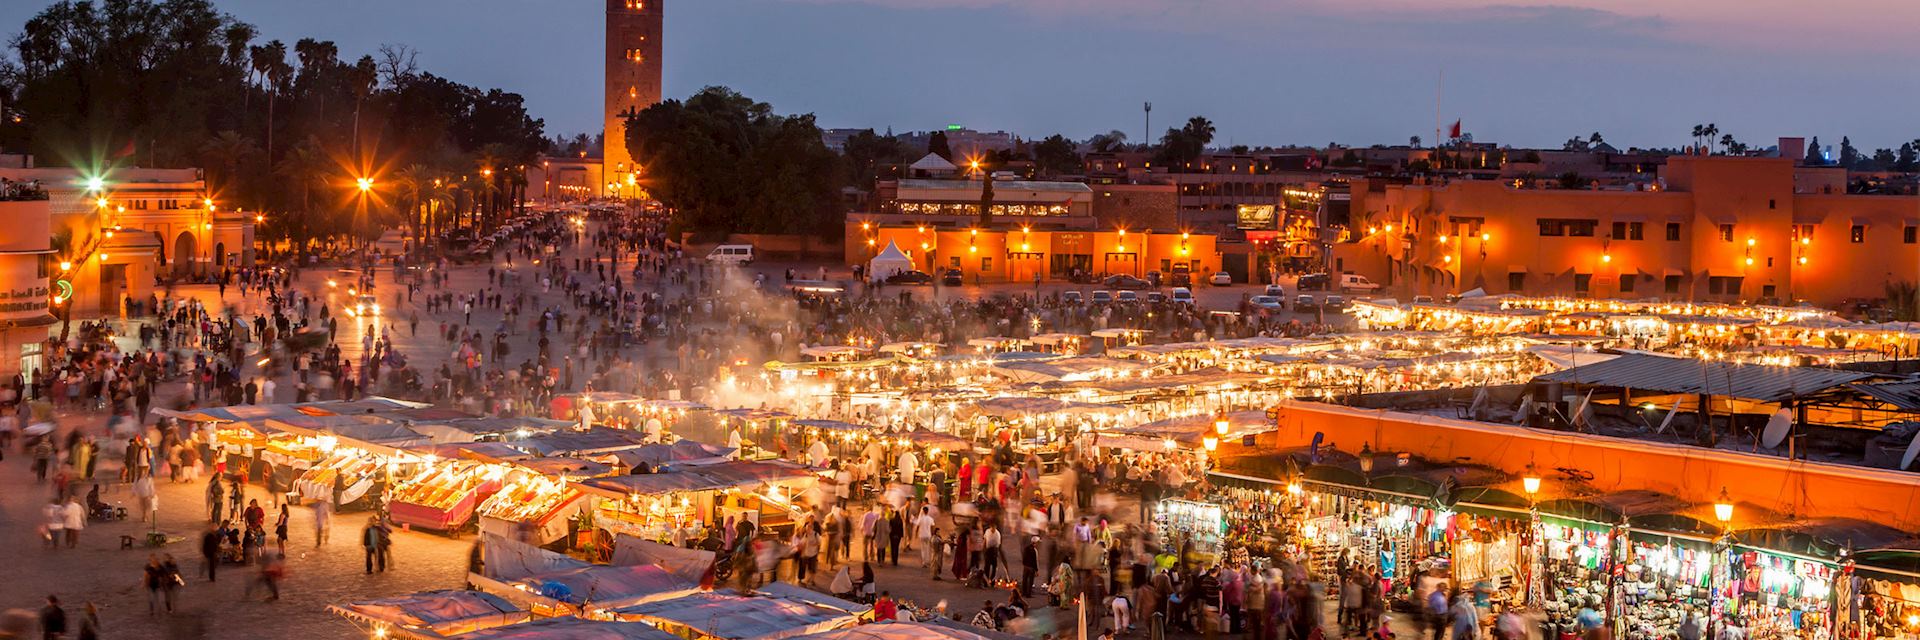 Discover Morocco in 7 days and 6 nights: Marrakech - Ourika - Agadir - Essaouira